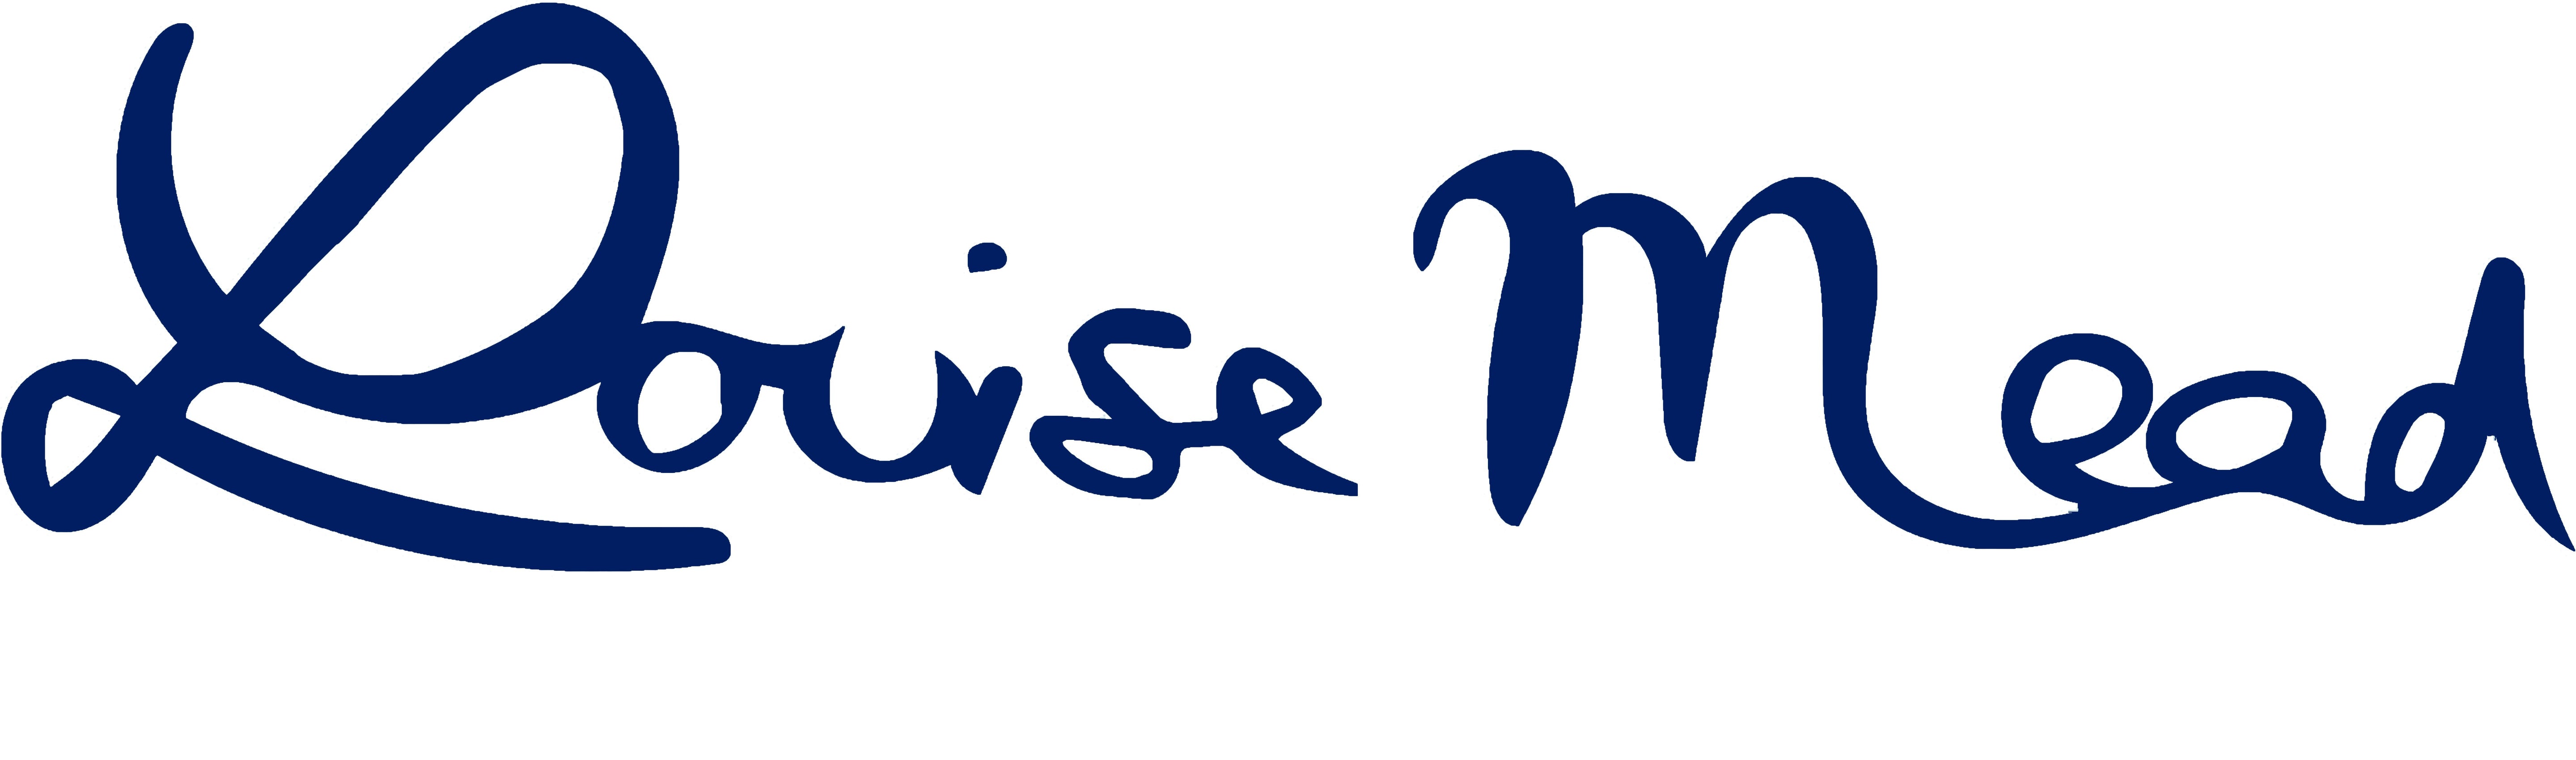 Dark blue logo featuring the Louise Mead signature